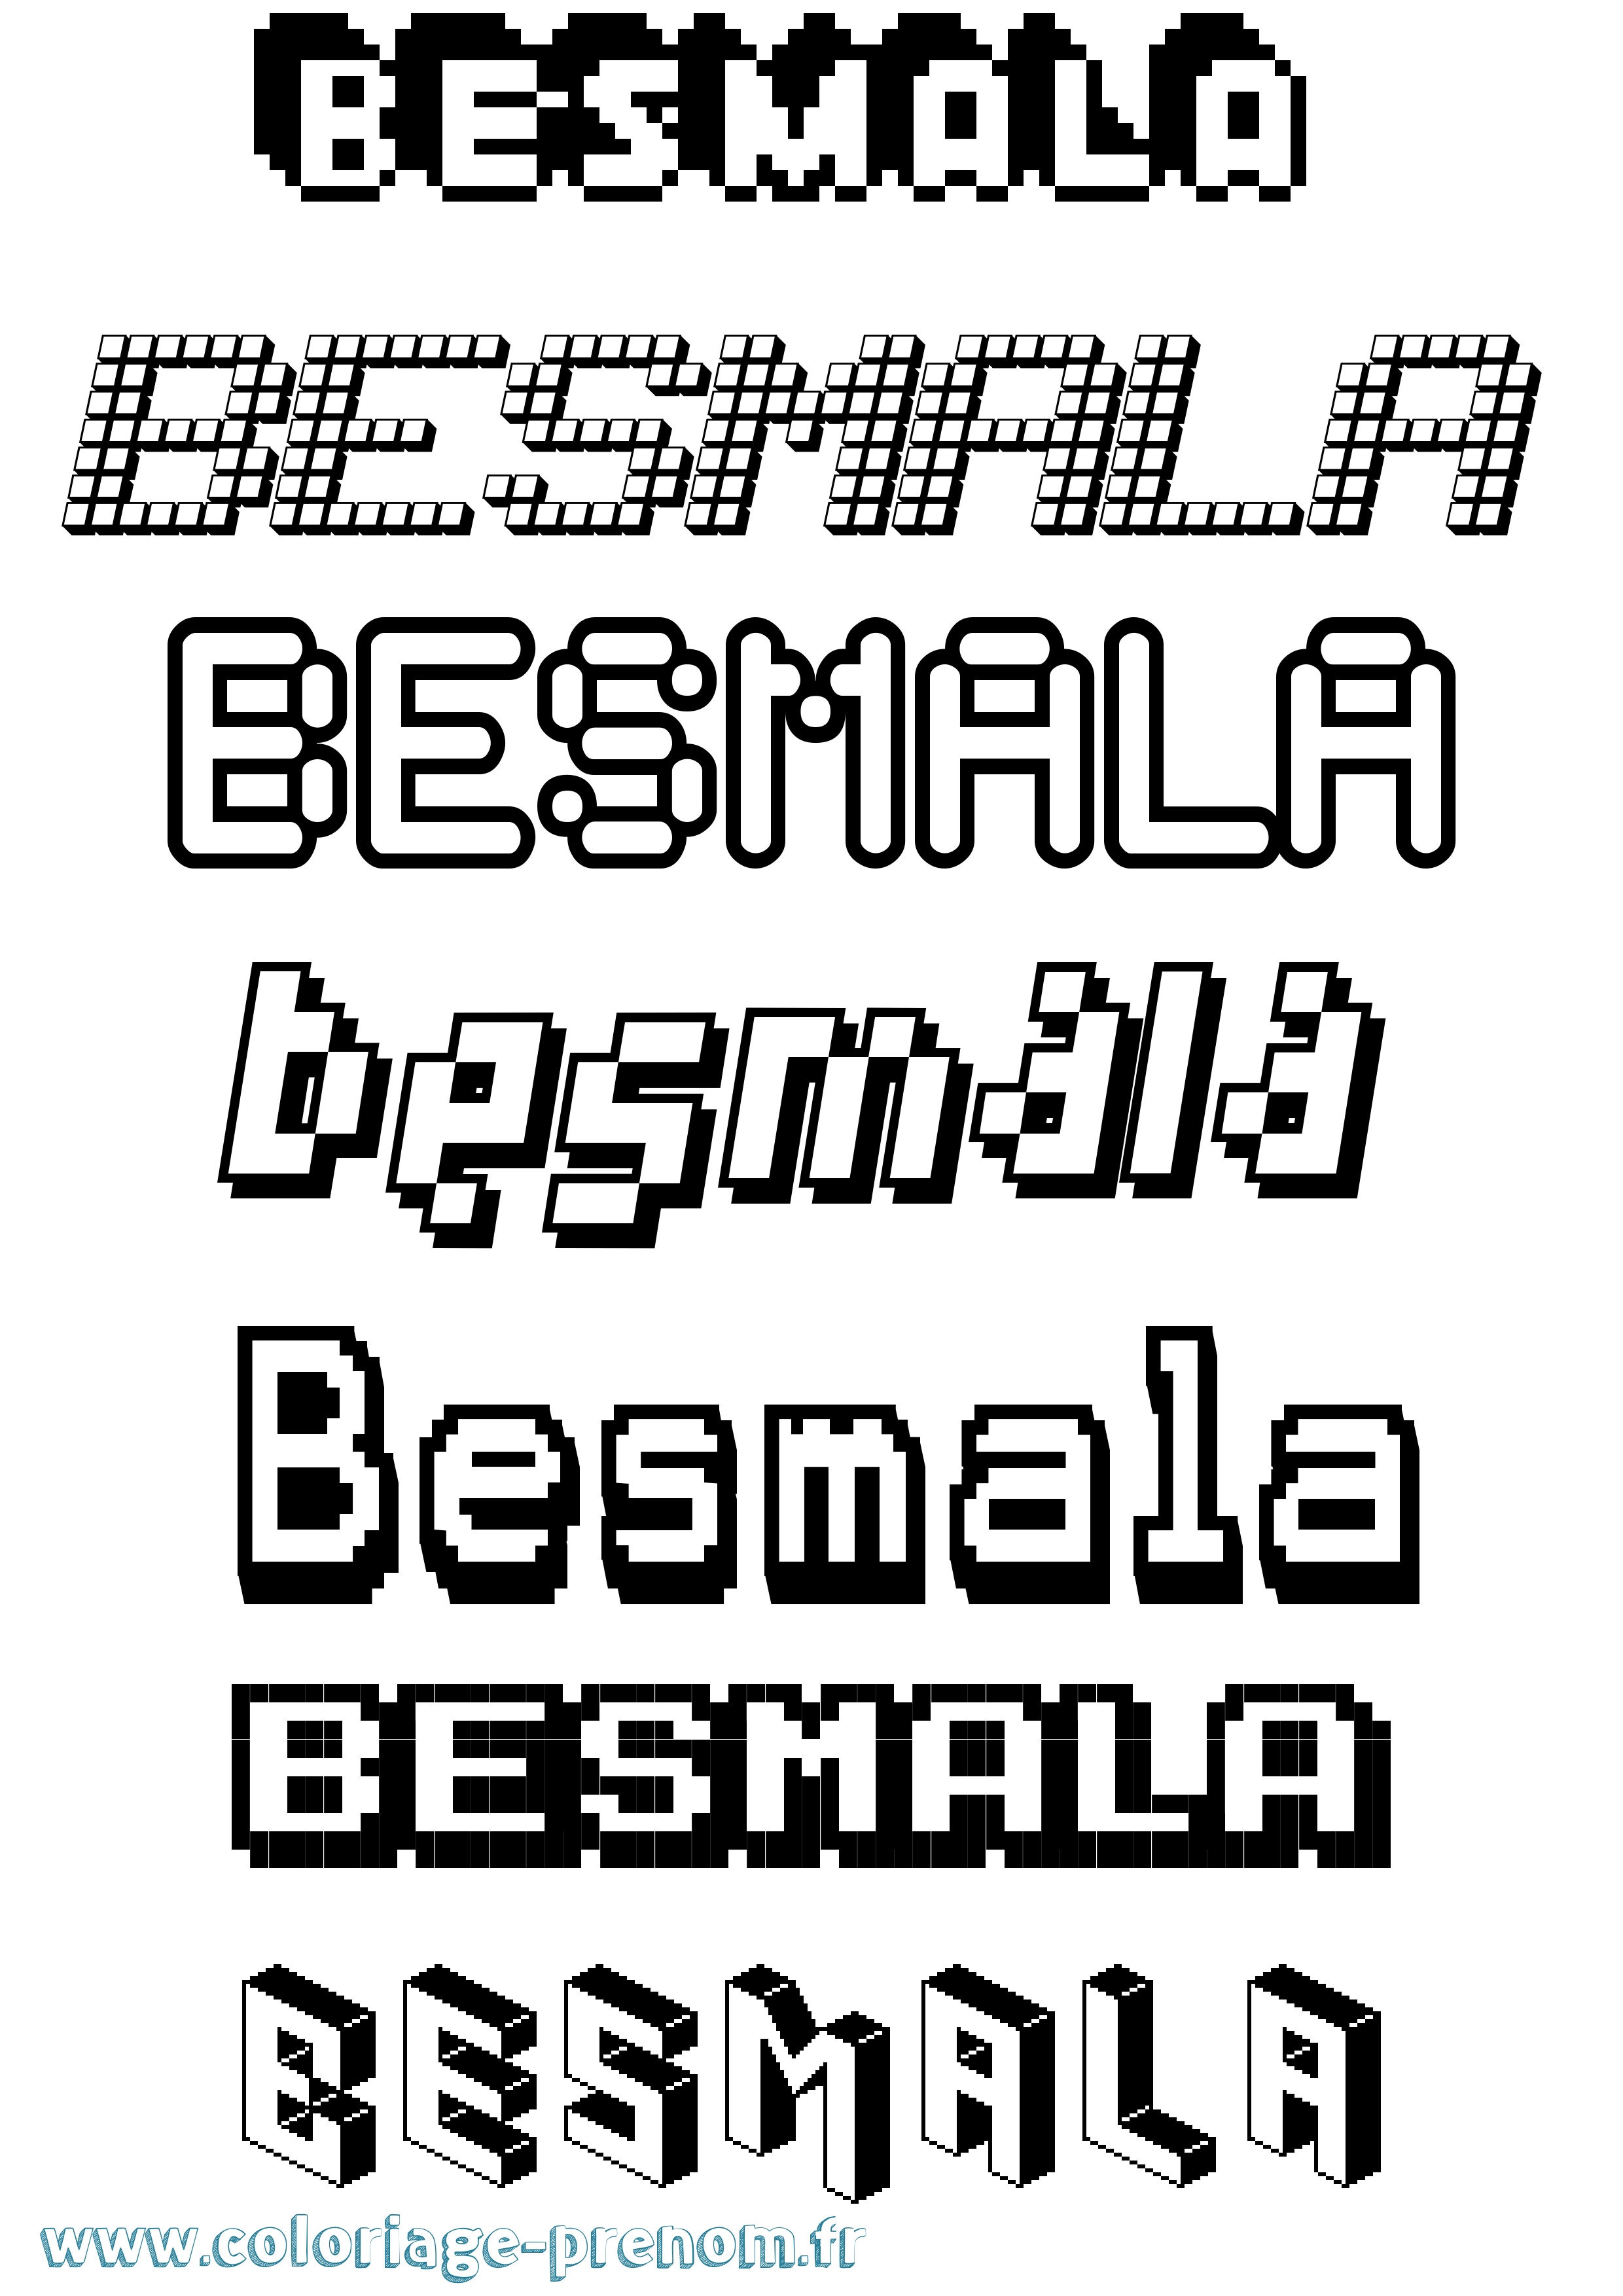 Coloriage prénom Besmala Pixel